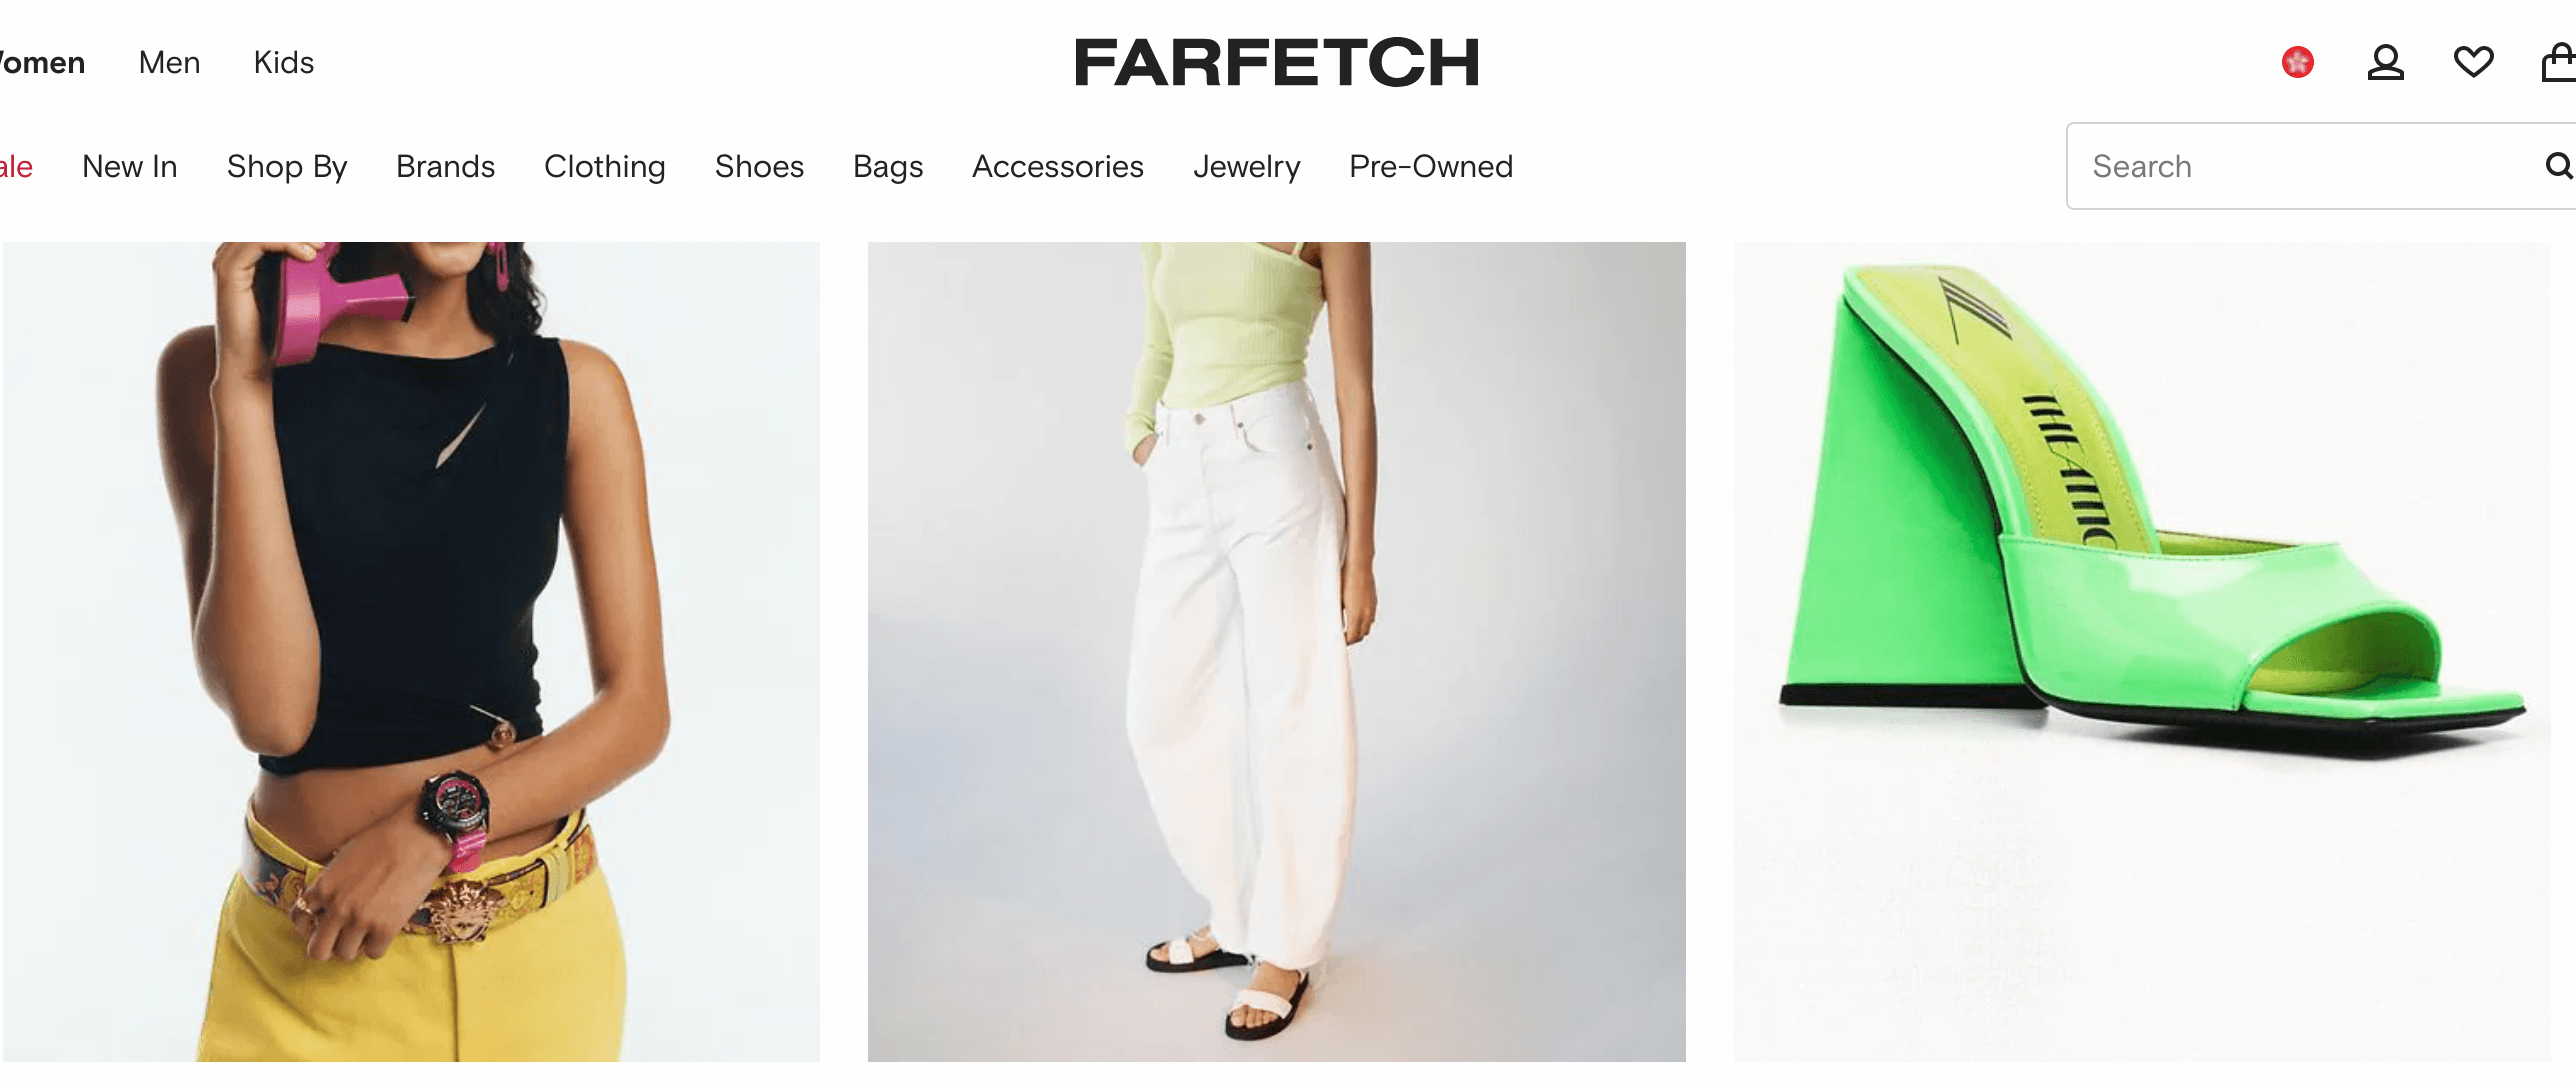 Farfetch 年中大促 ，麥昆運動鞋$275，勃肯鞋$58 低至5折+部分額外8.5折